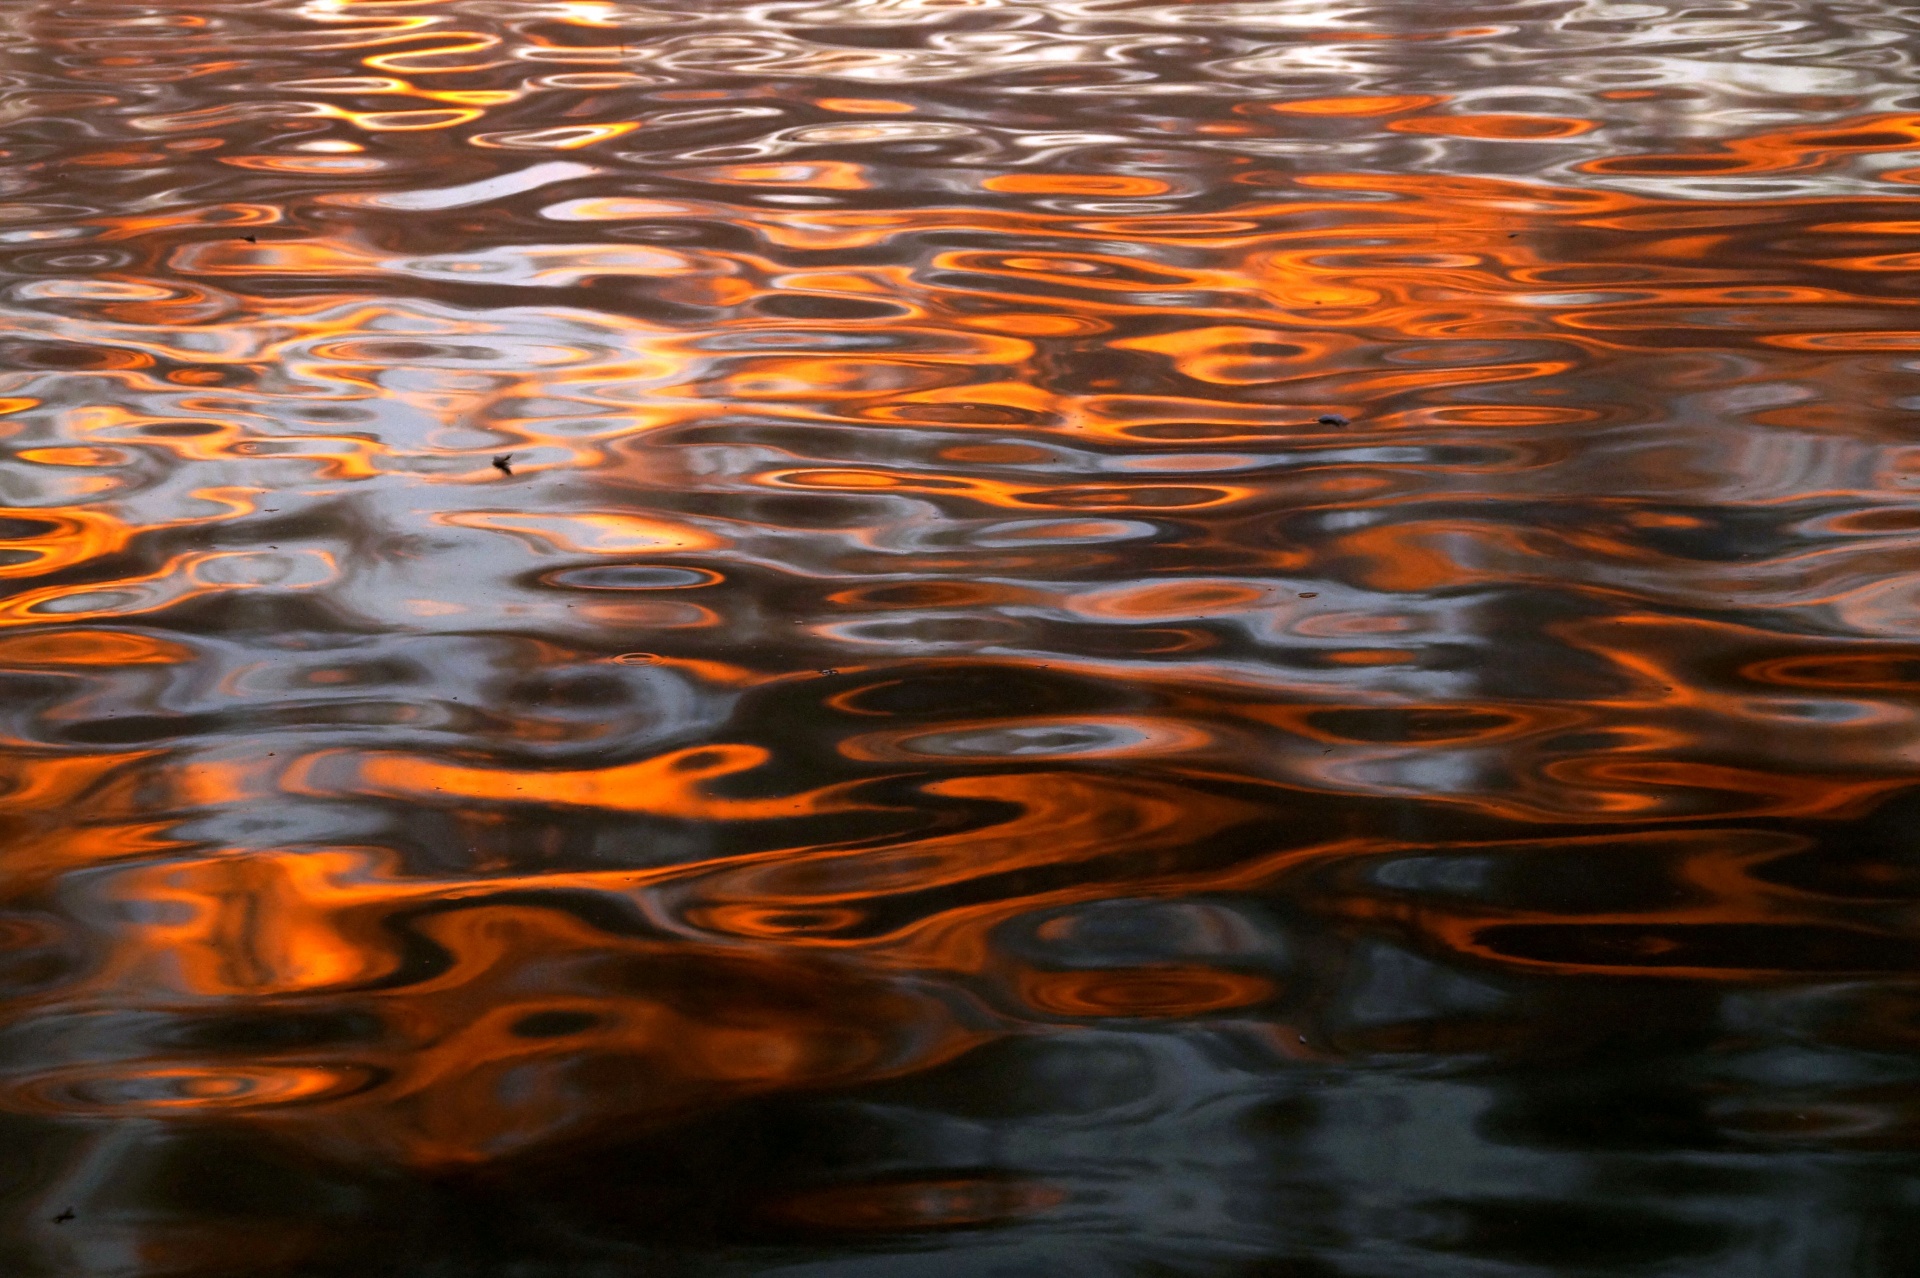 Ondas de agua reflejos de luz sol